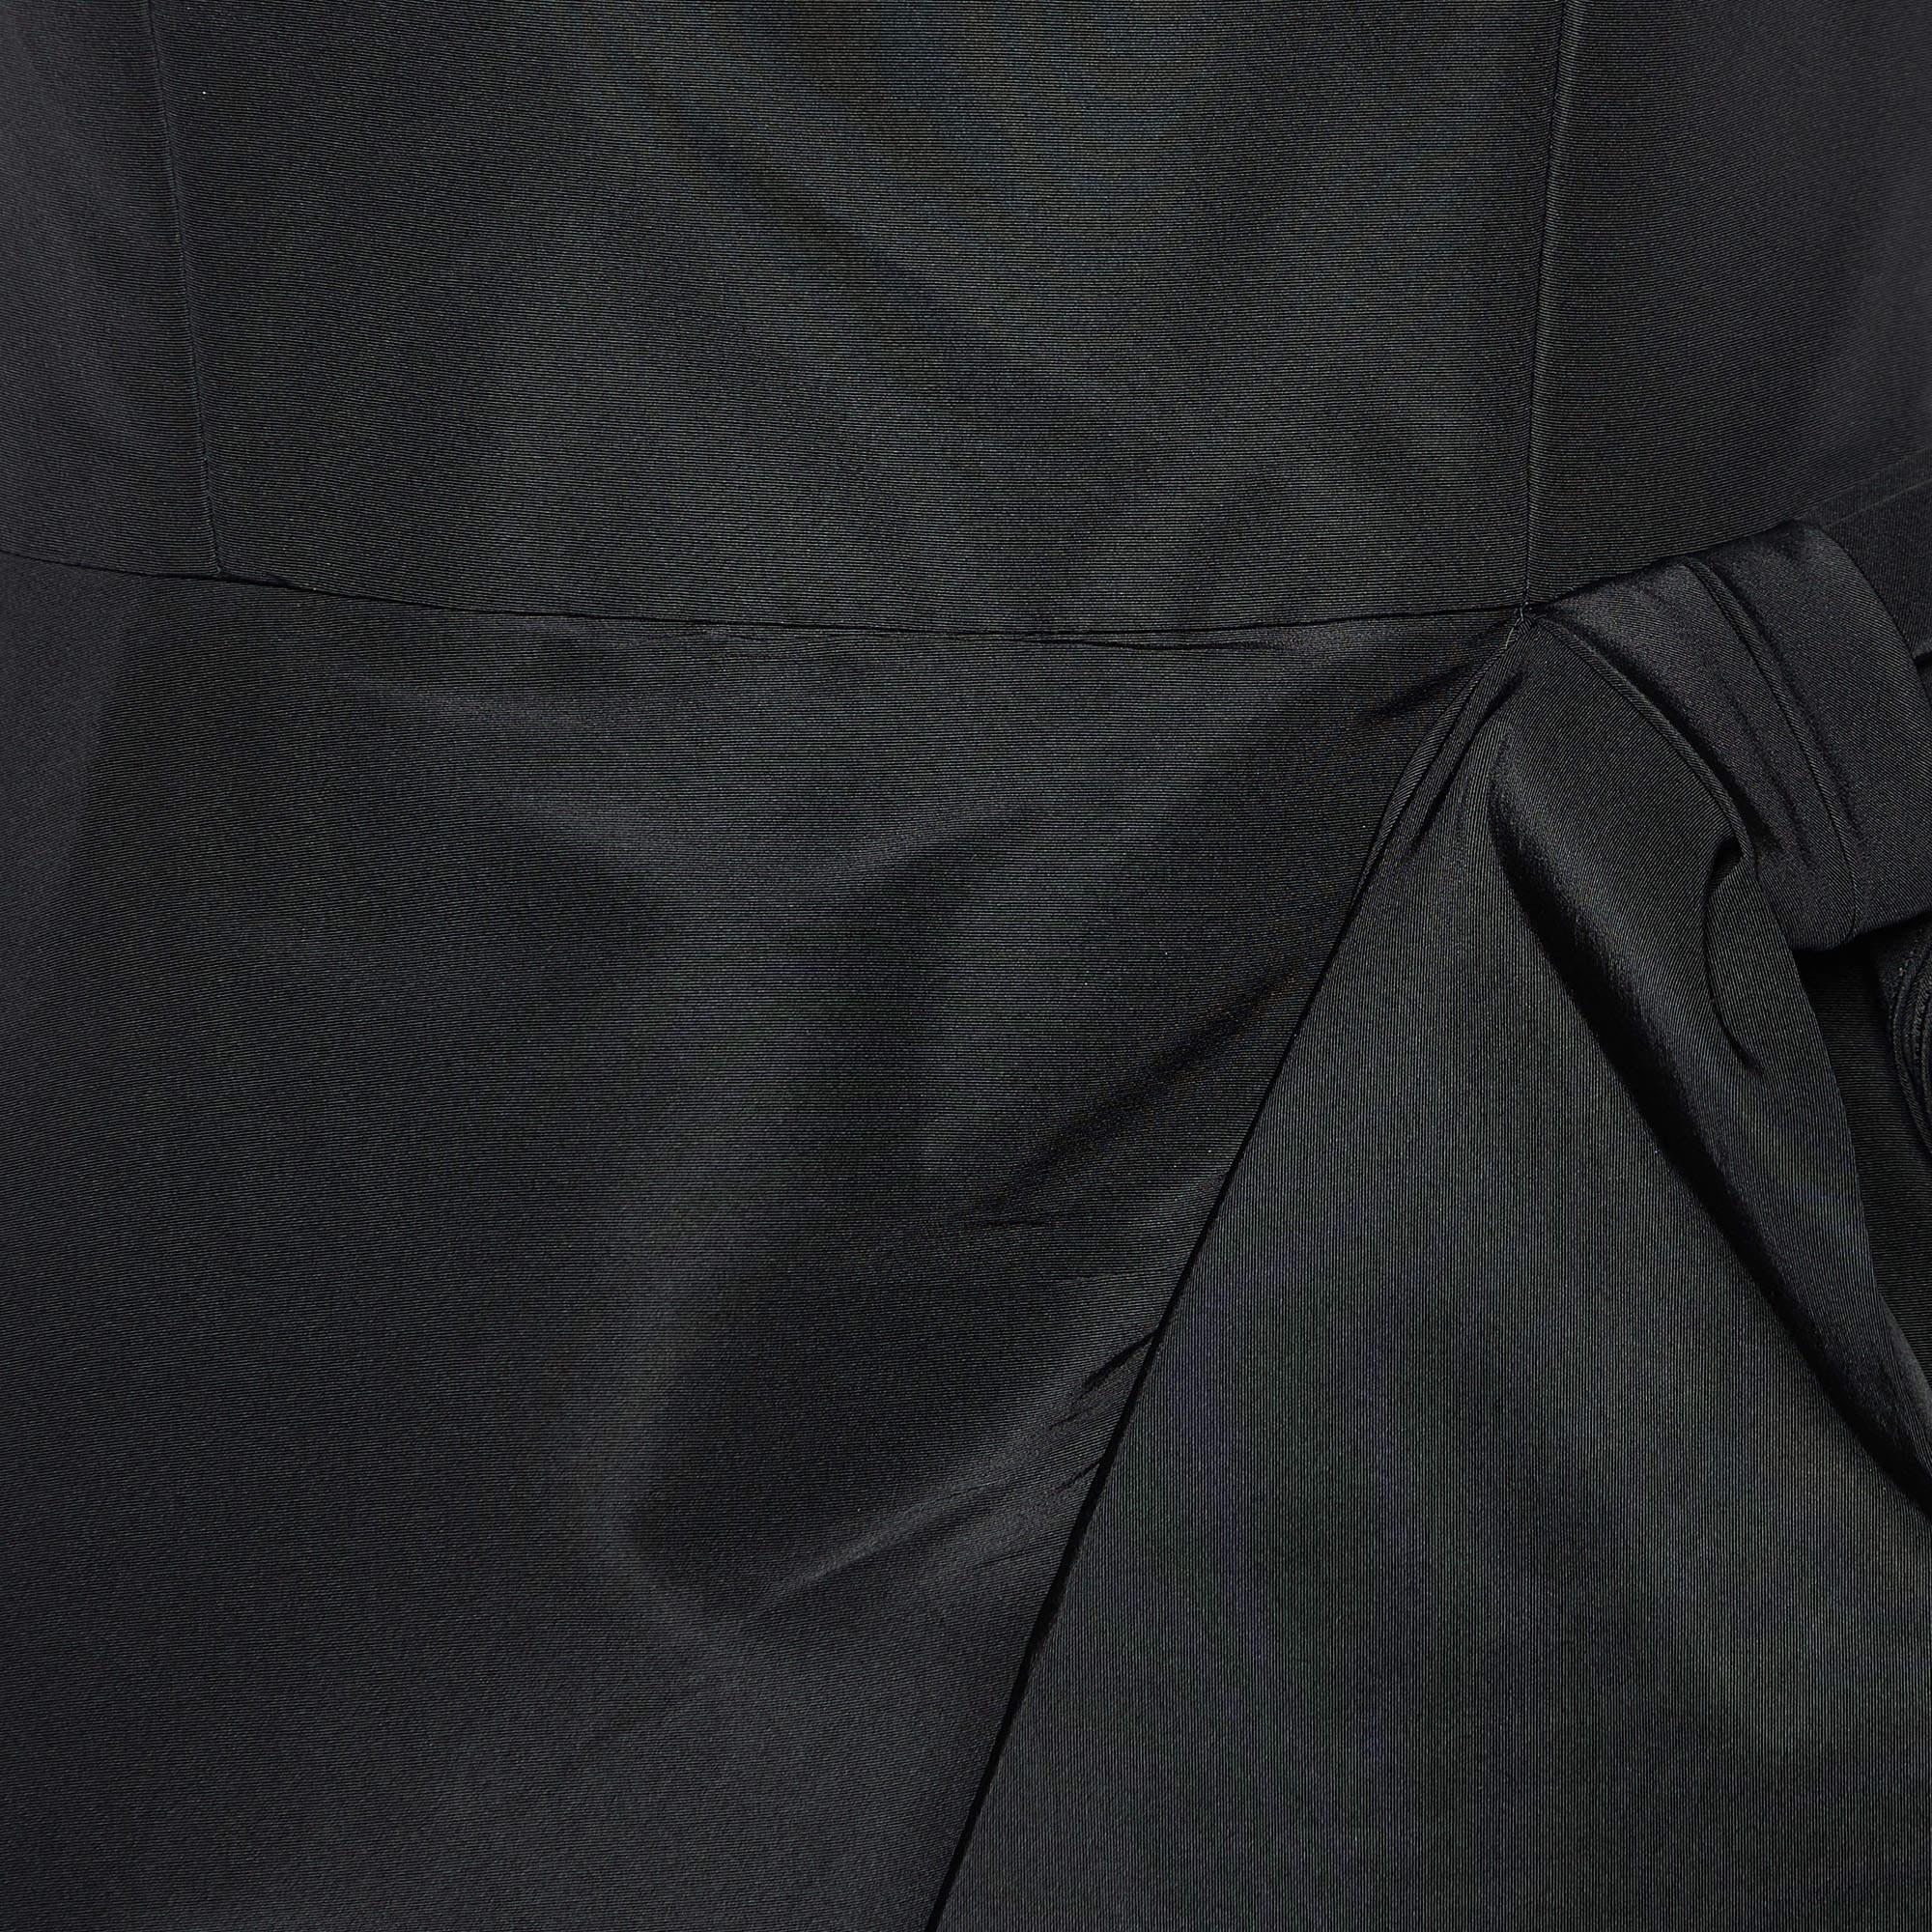 Carolina Herrera Black Silk Taffeta Bow Detail Cascading Gown M In Excellent Condition For Sale In Dubai, Al Qouz 2